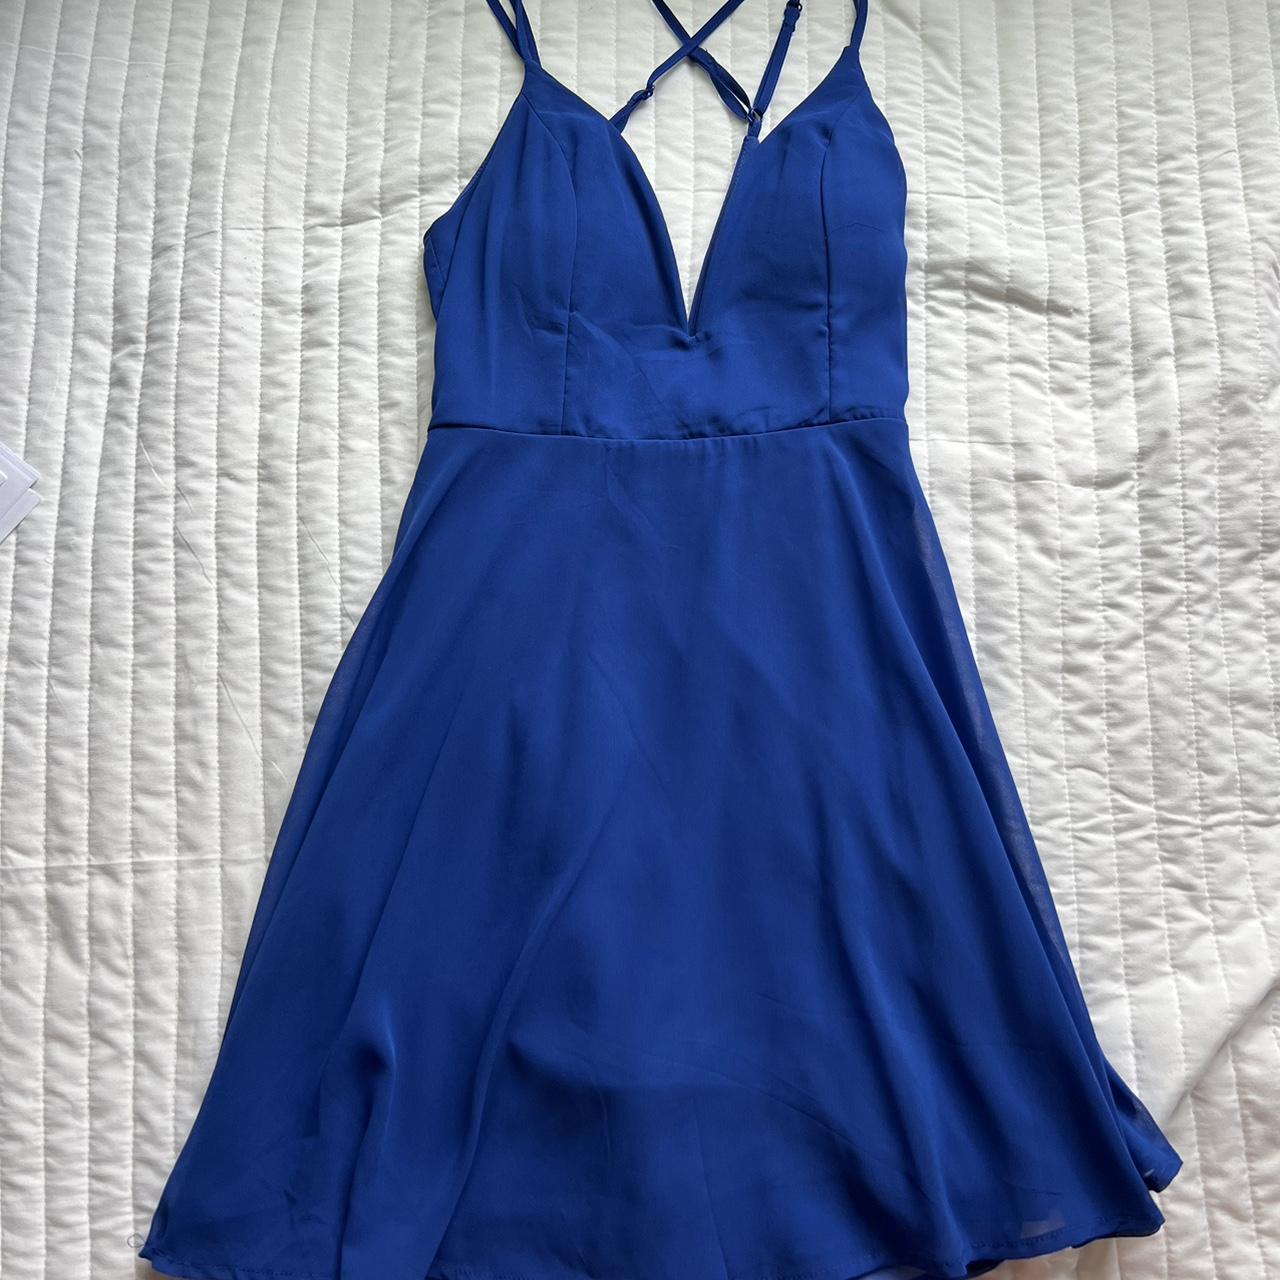 royal blue skater dress, worn only once! perfect for... - Depop